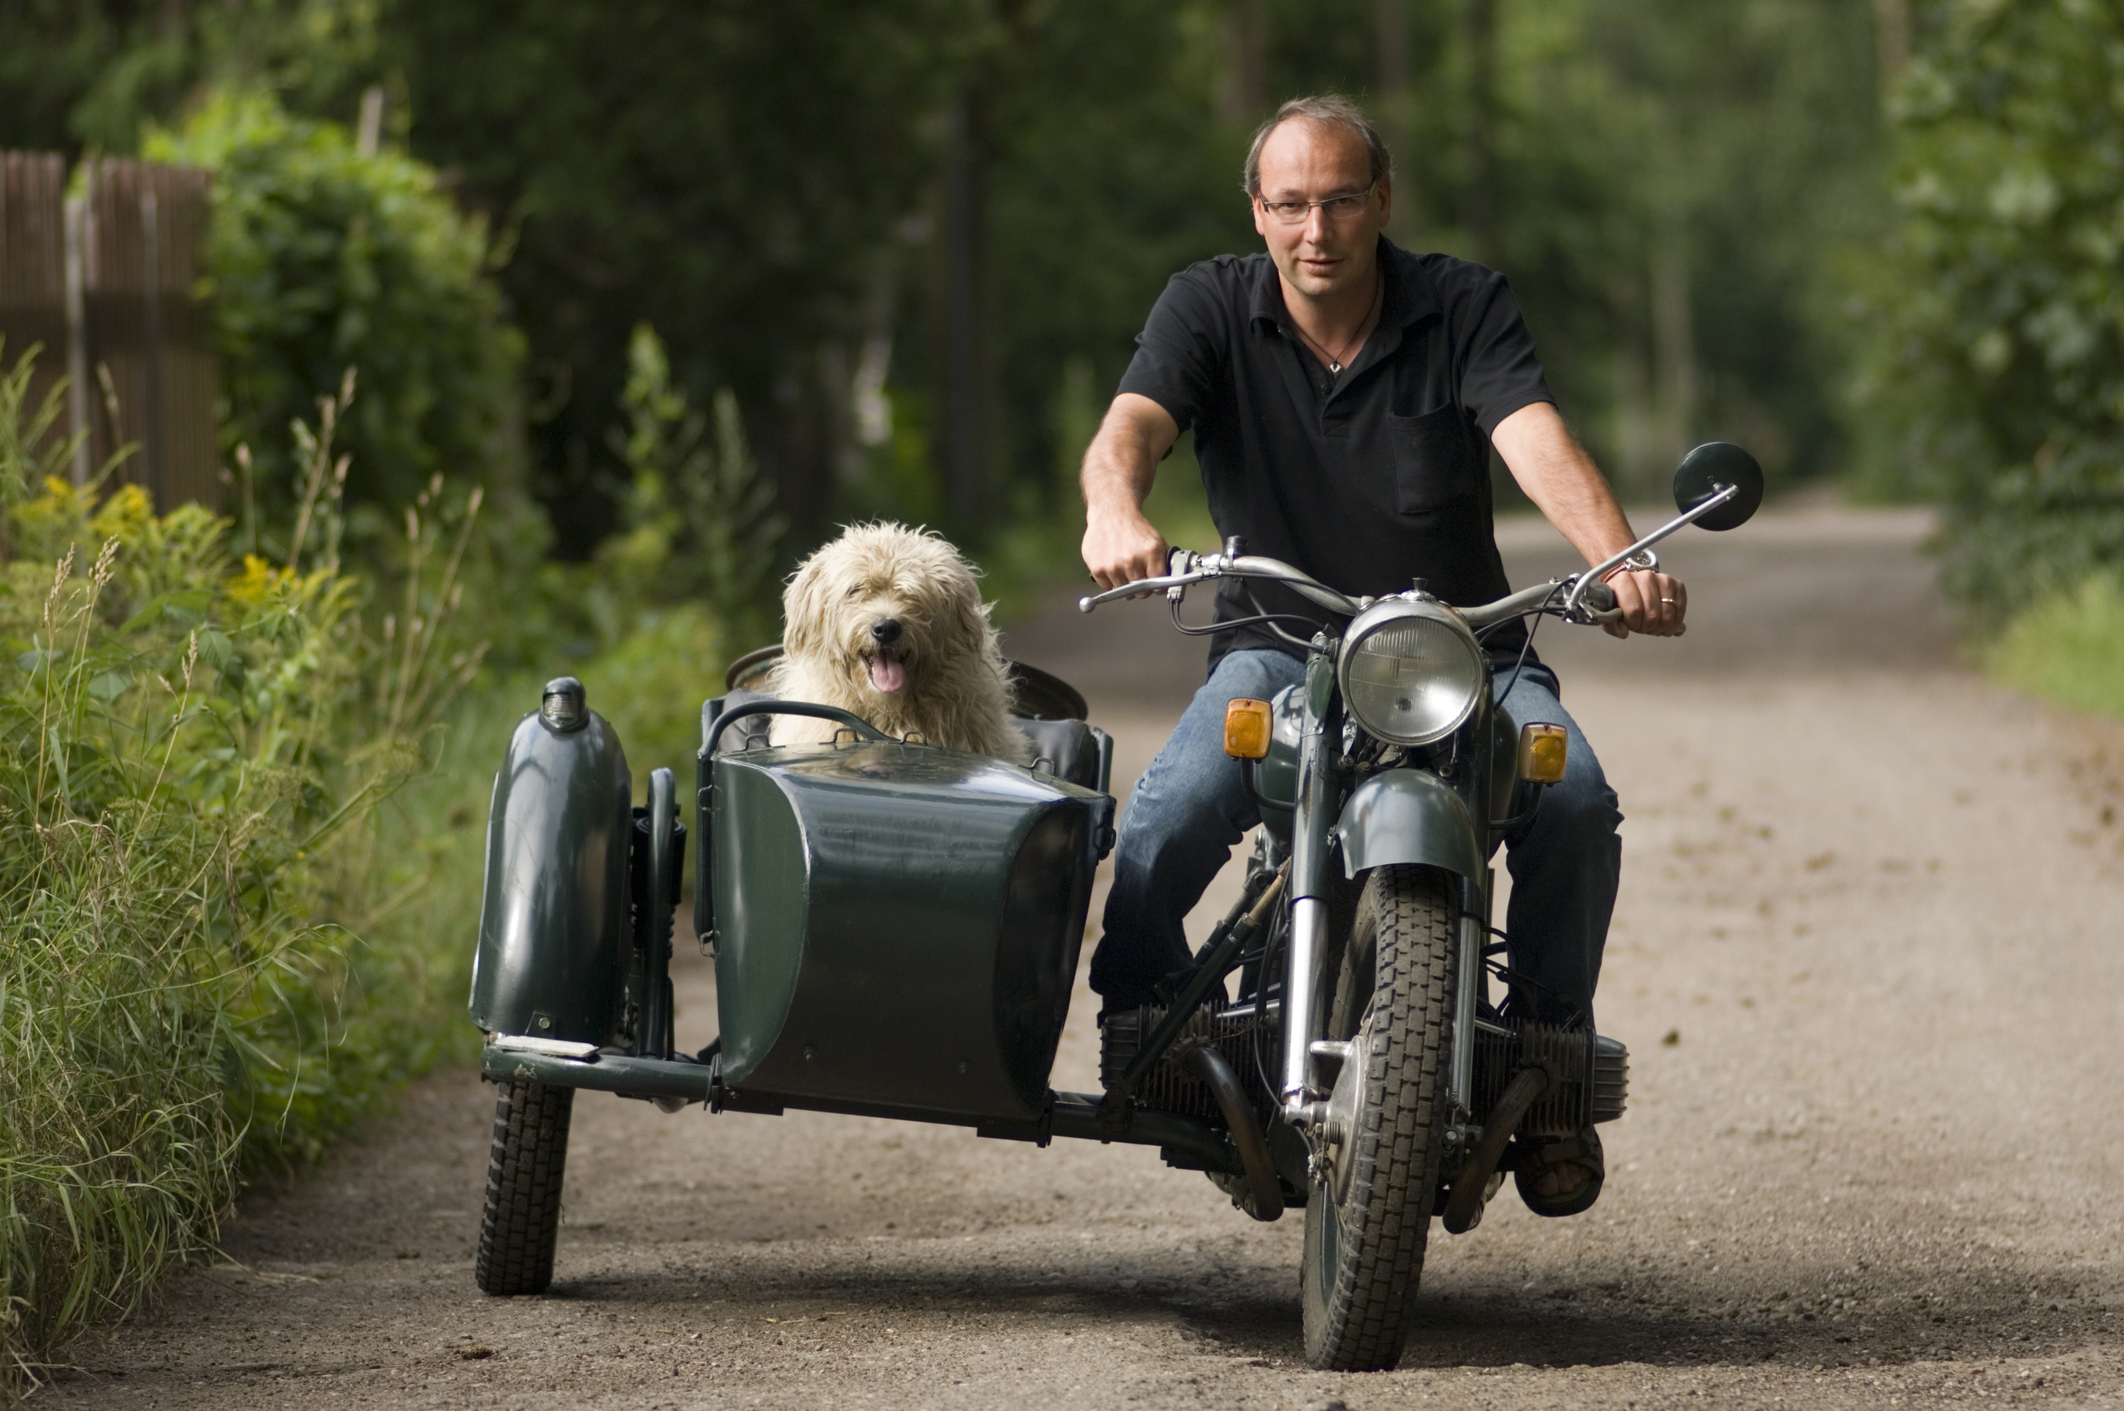 biker w sidecar and dog in it